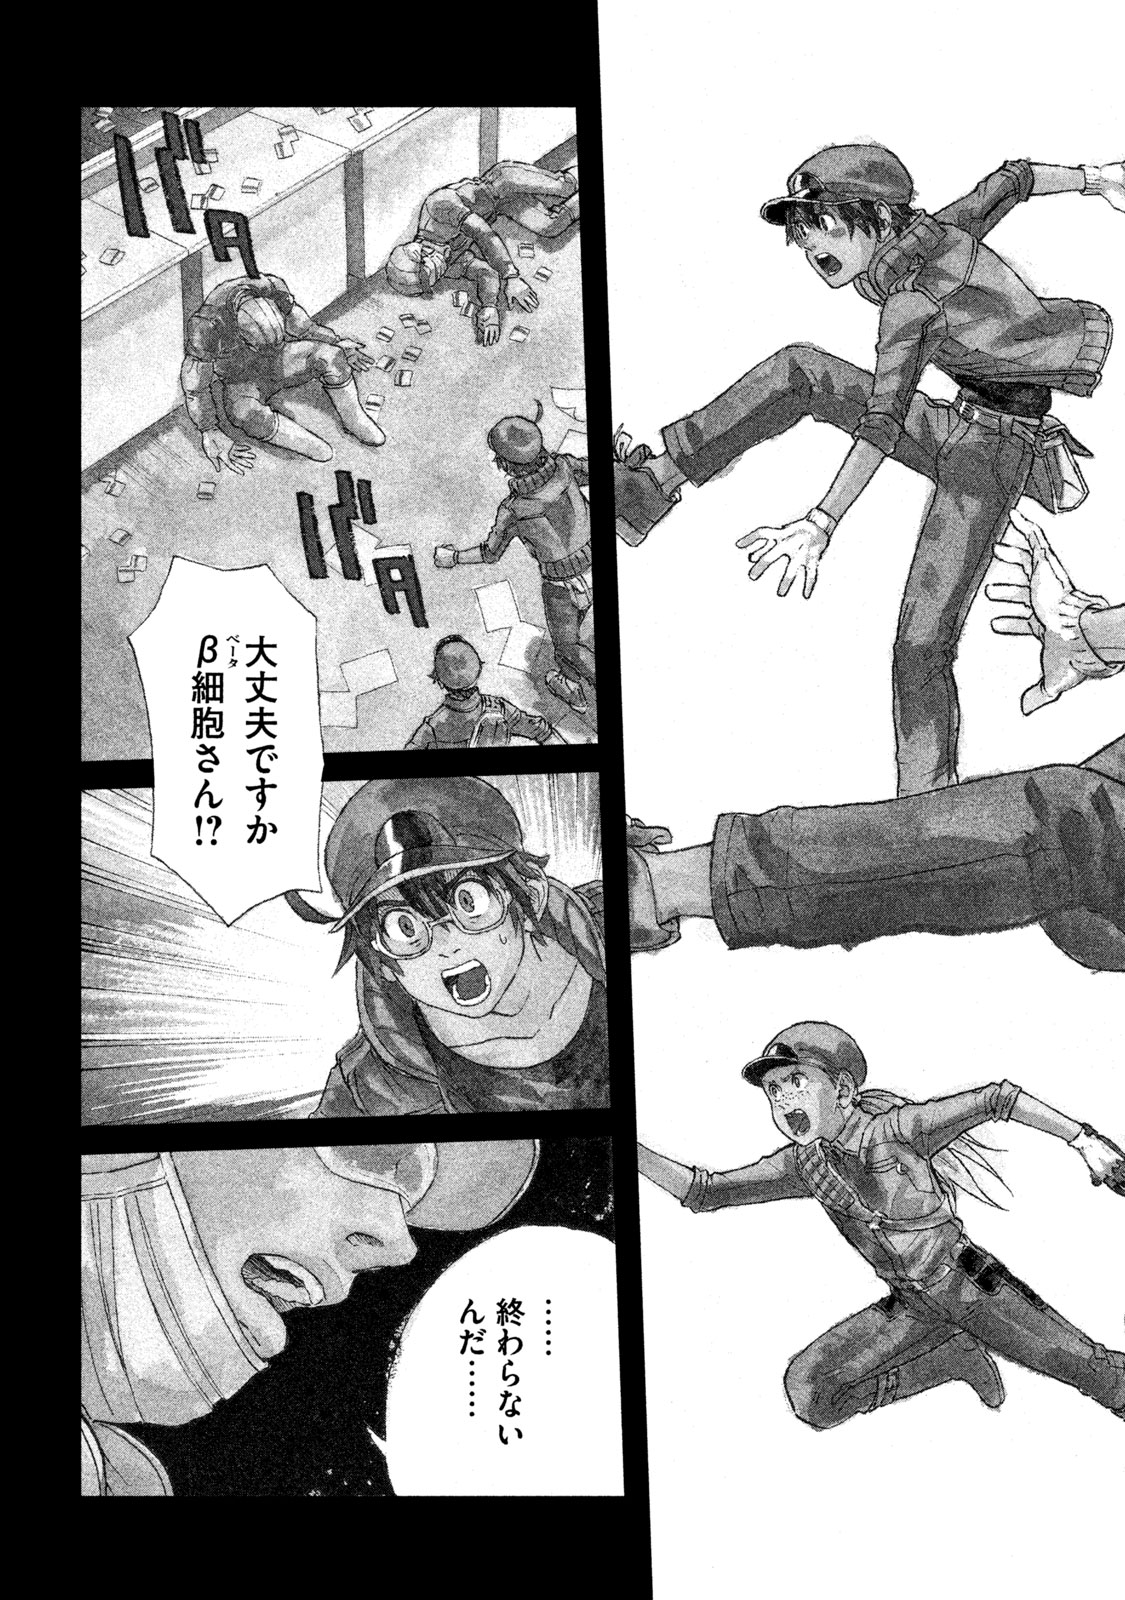 Hataraku Saibou BLACK - Chapter 19 - Page 4